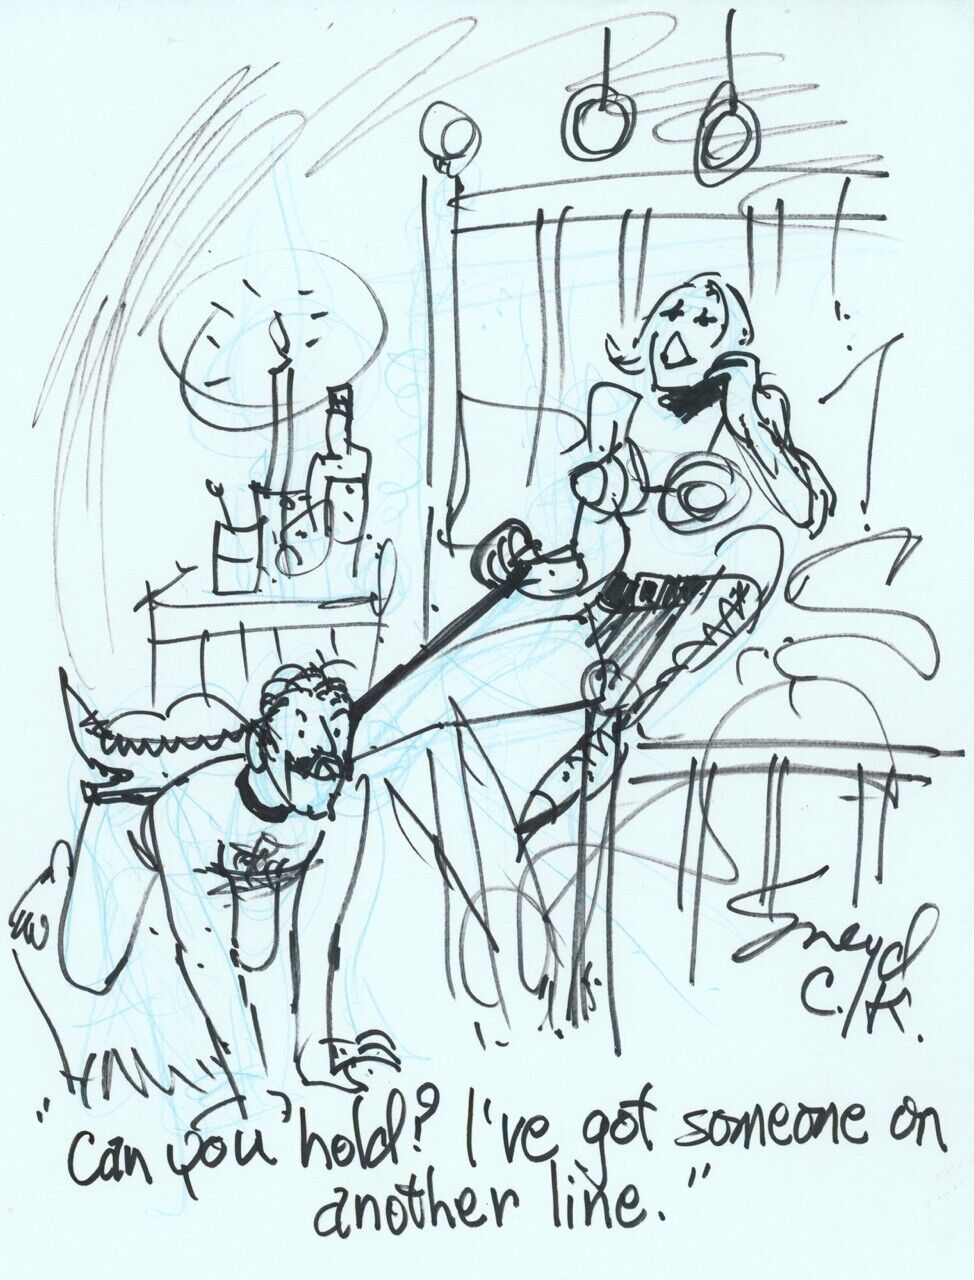 Doug Sneyd Signed Original Art Playboy Gag Rough Sketch in UNPUBLISHED SNEYD